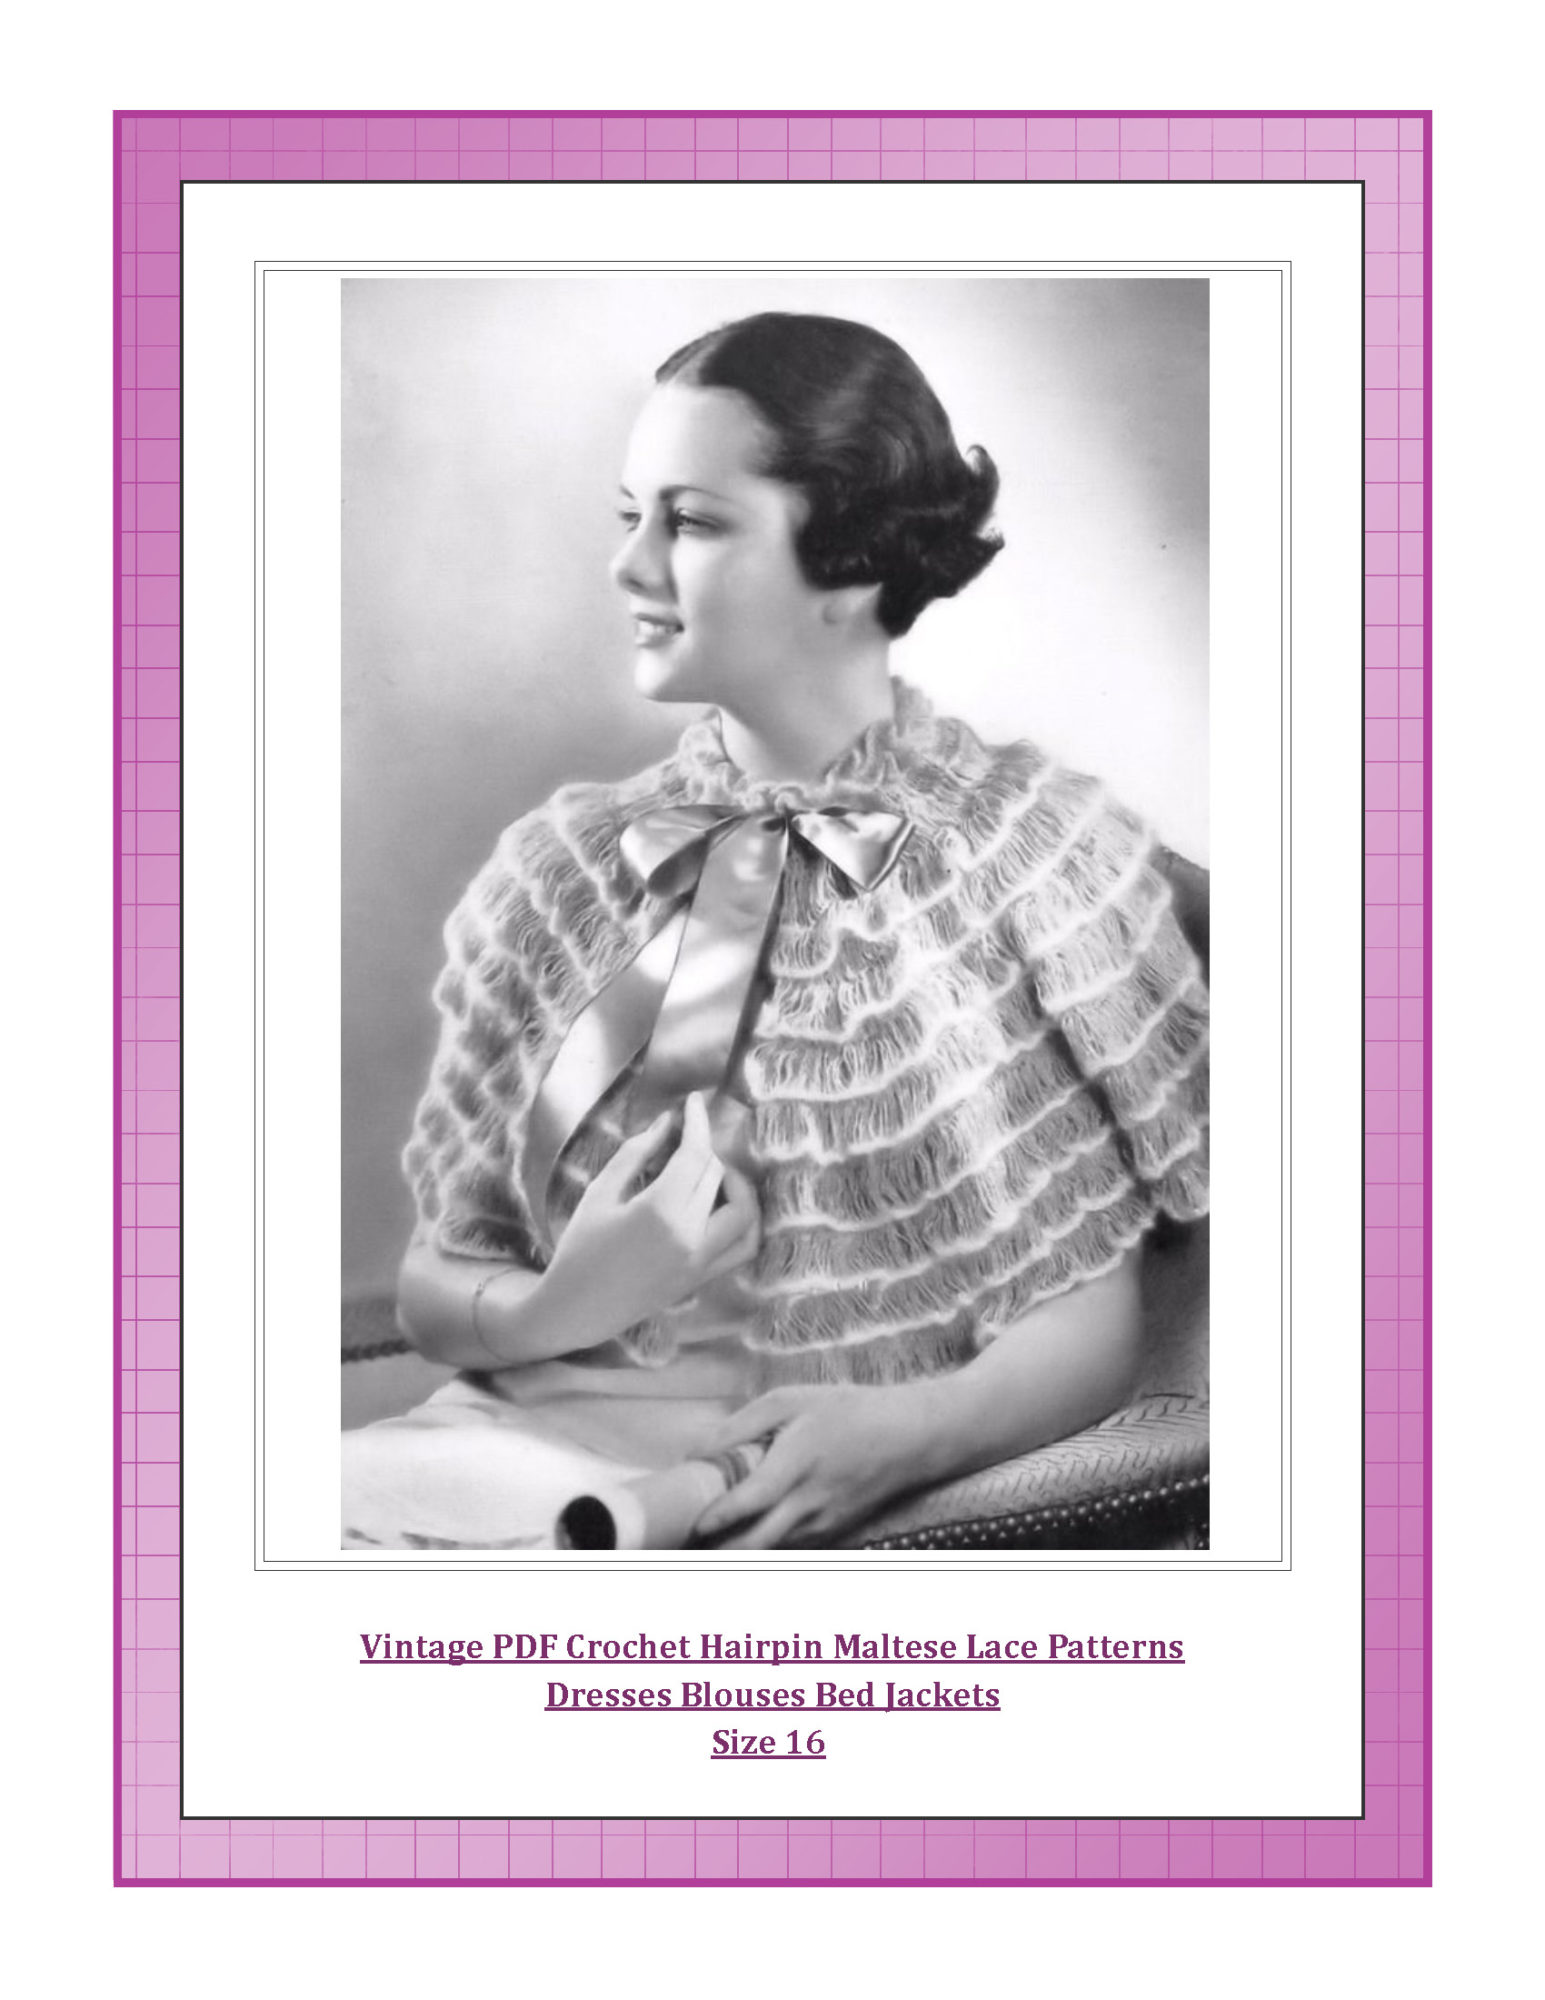 Vintage PDF Crochet Hairpin Maltese Lace Patterns Dresses Blouses Bed Jackets Size 16 